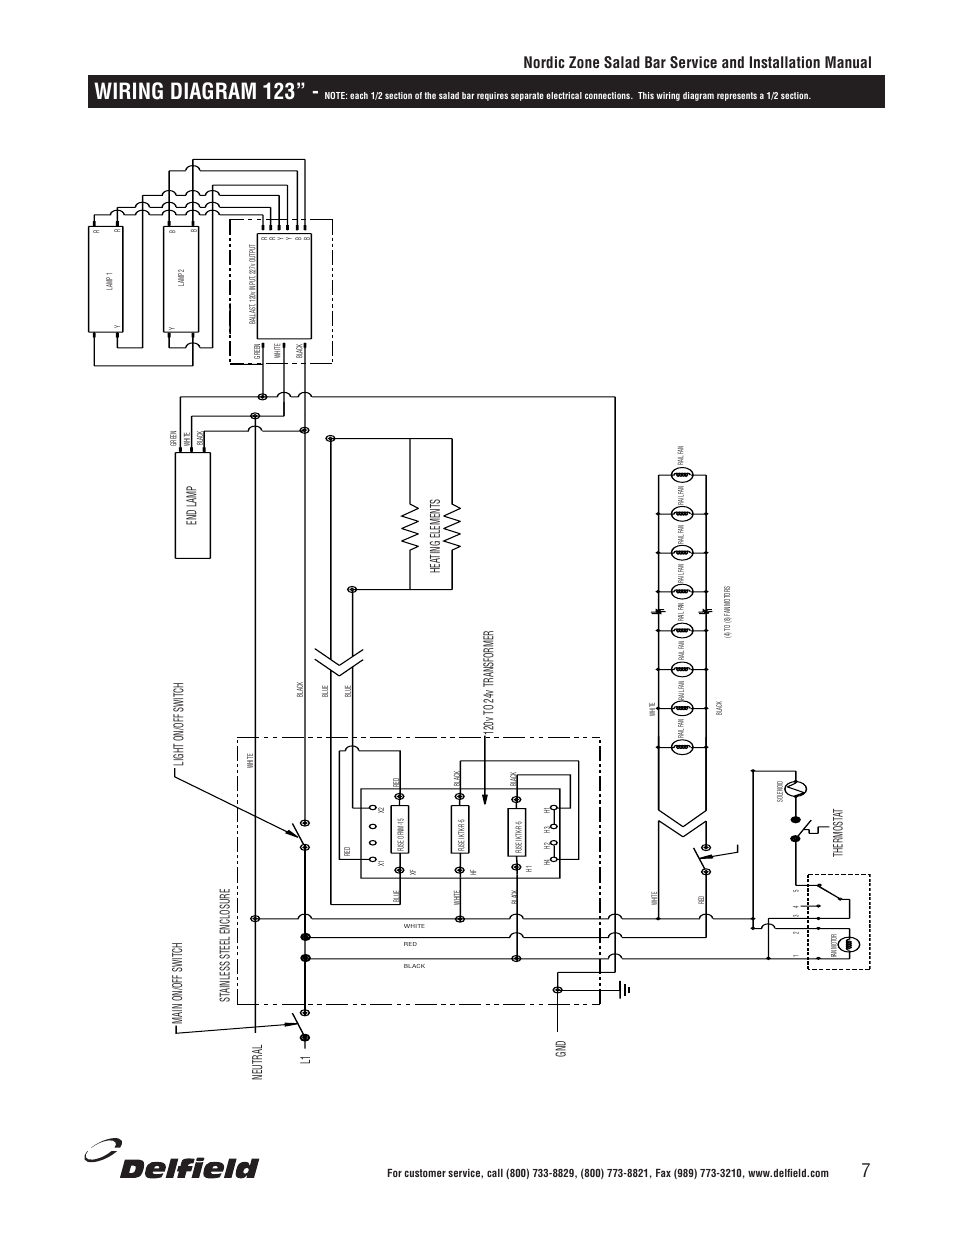 defrost termination fan delay switch wiring diagram